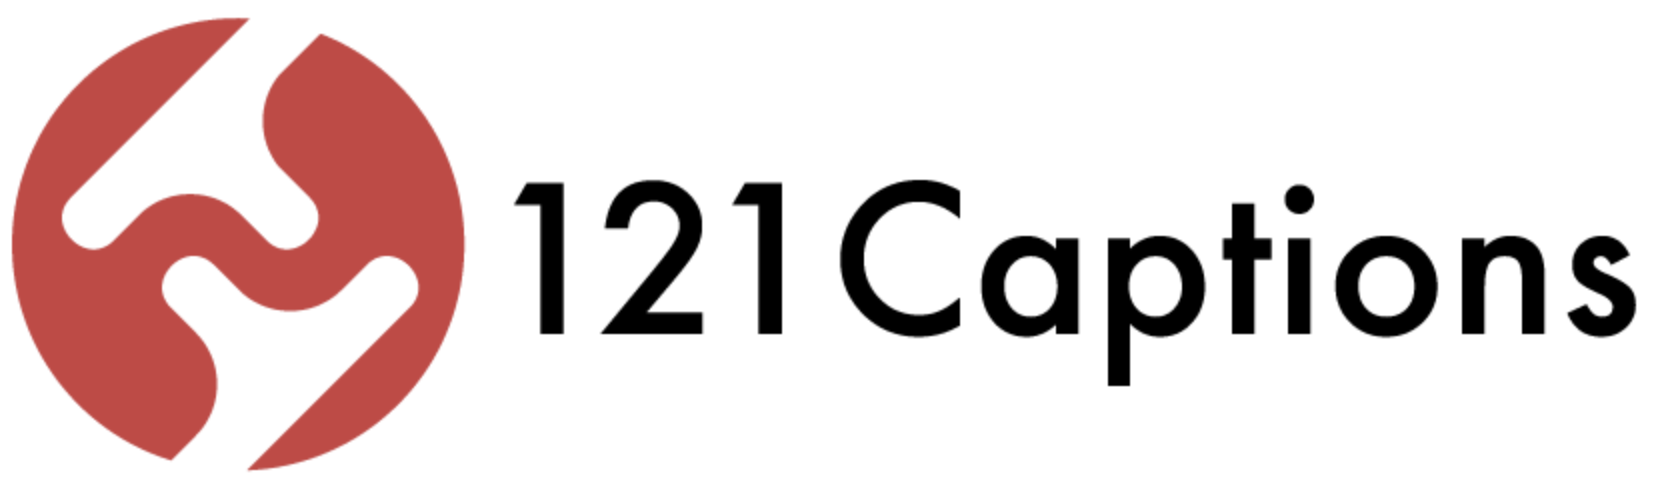 121 Captions logo